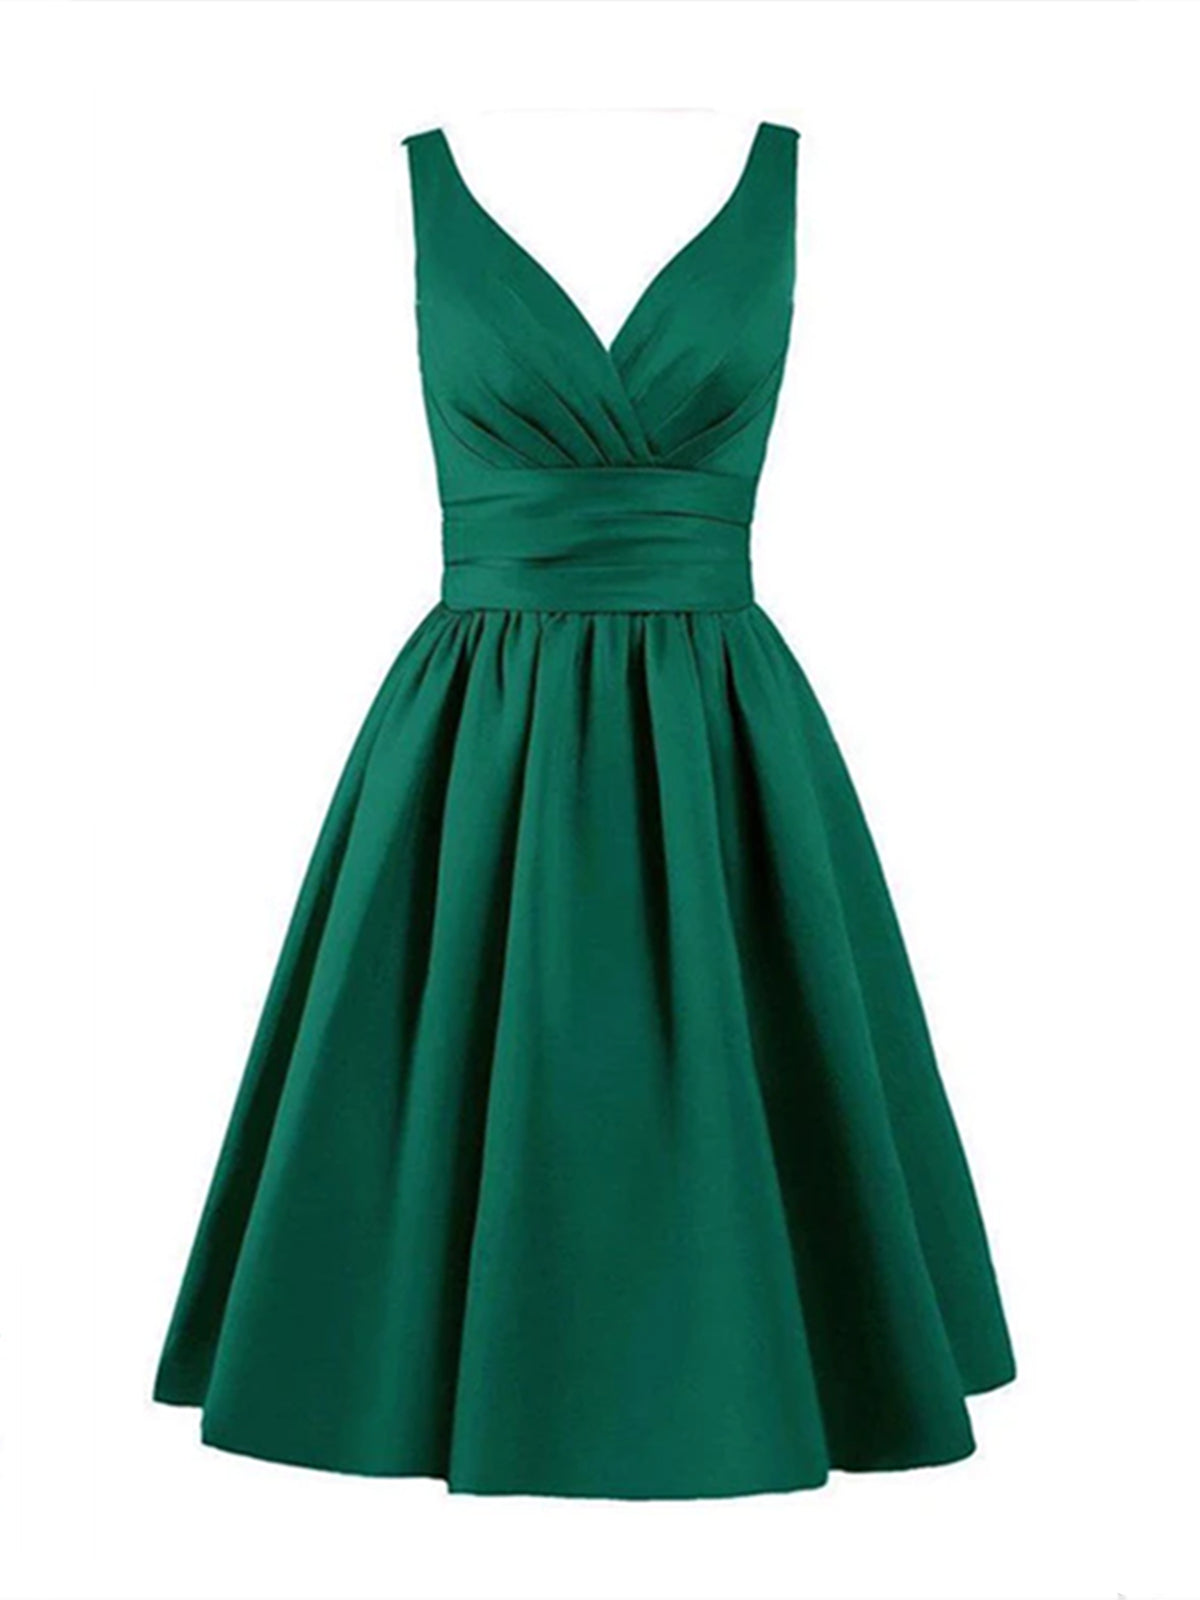 Black Dress Classy, Short Green Satin Prom Dresses, Short Green Satin Graduation Homecoming Dresses